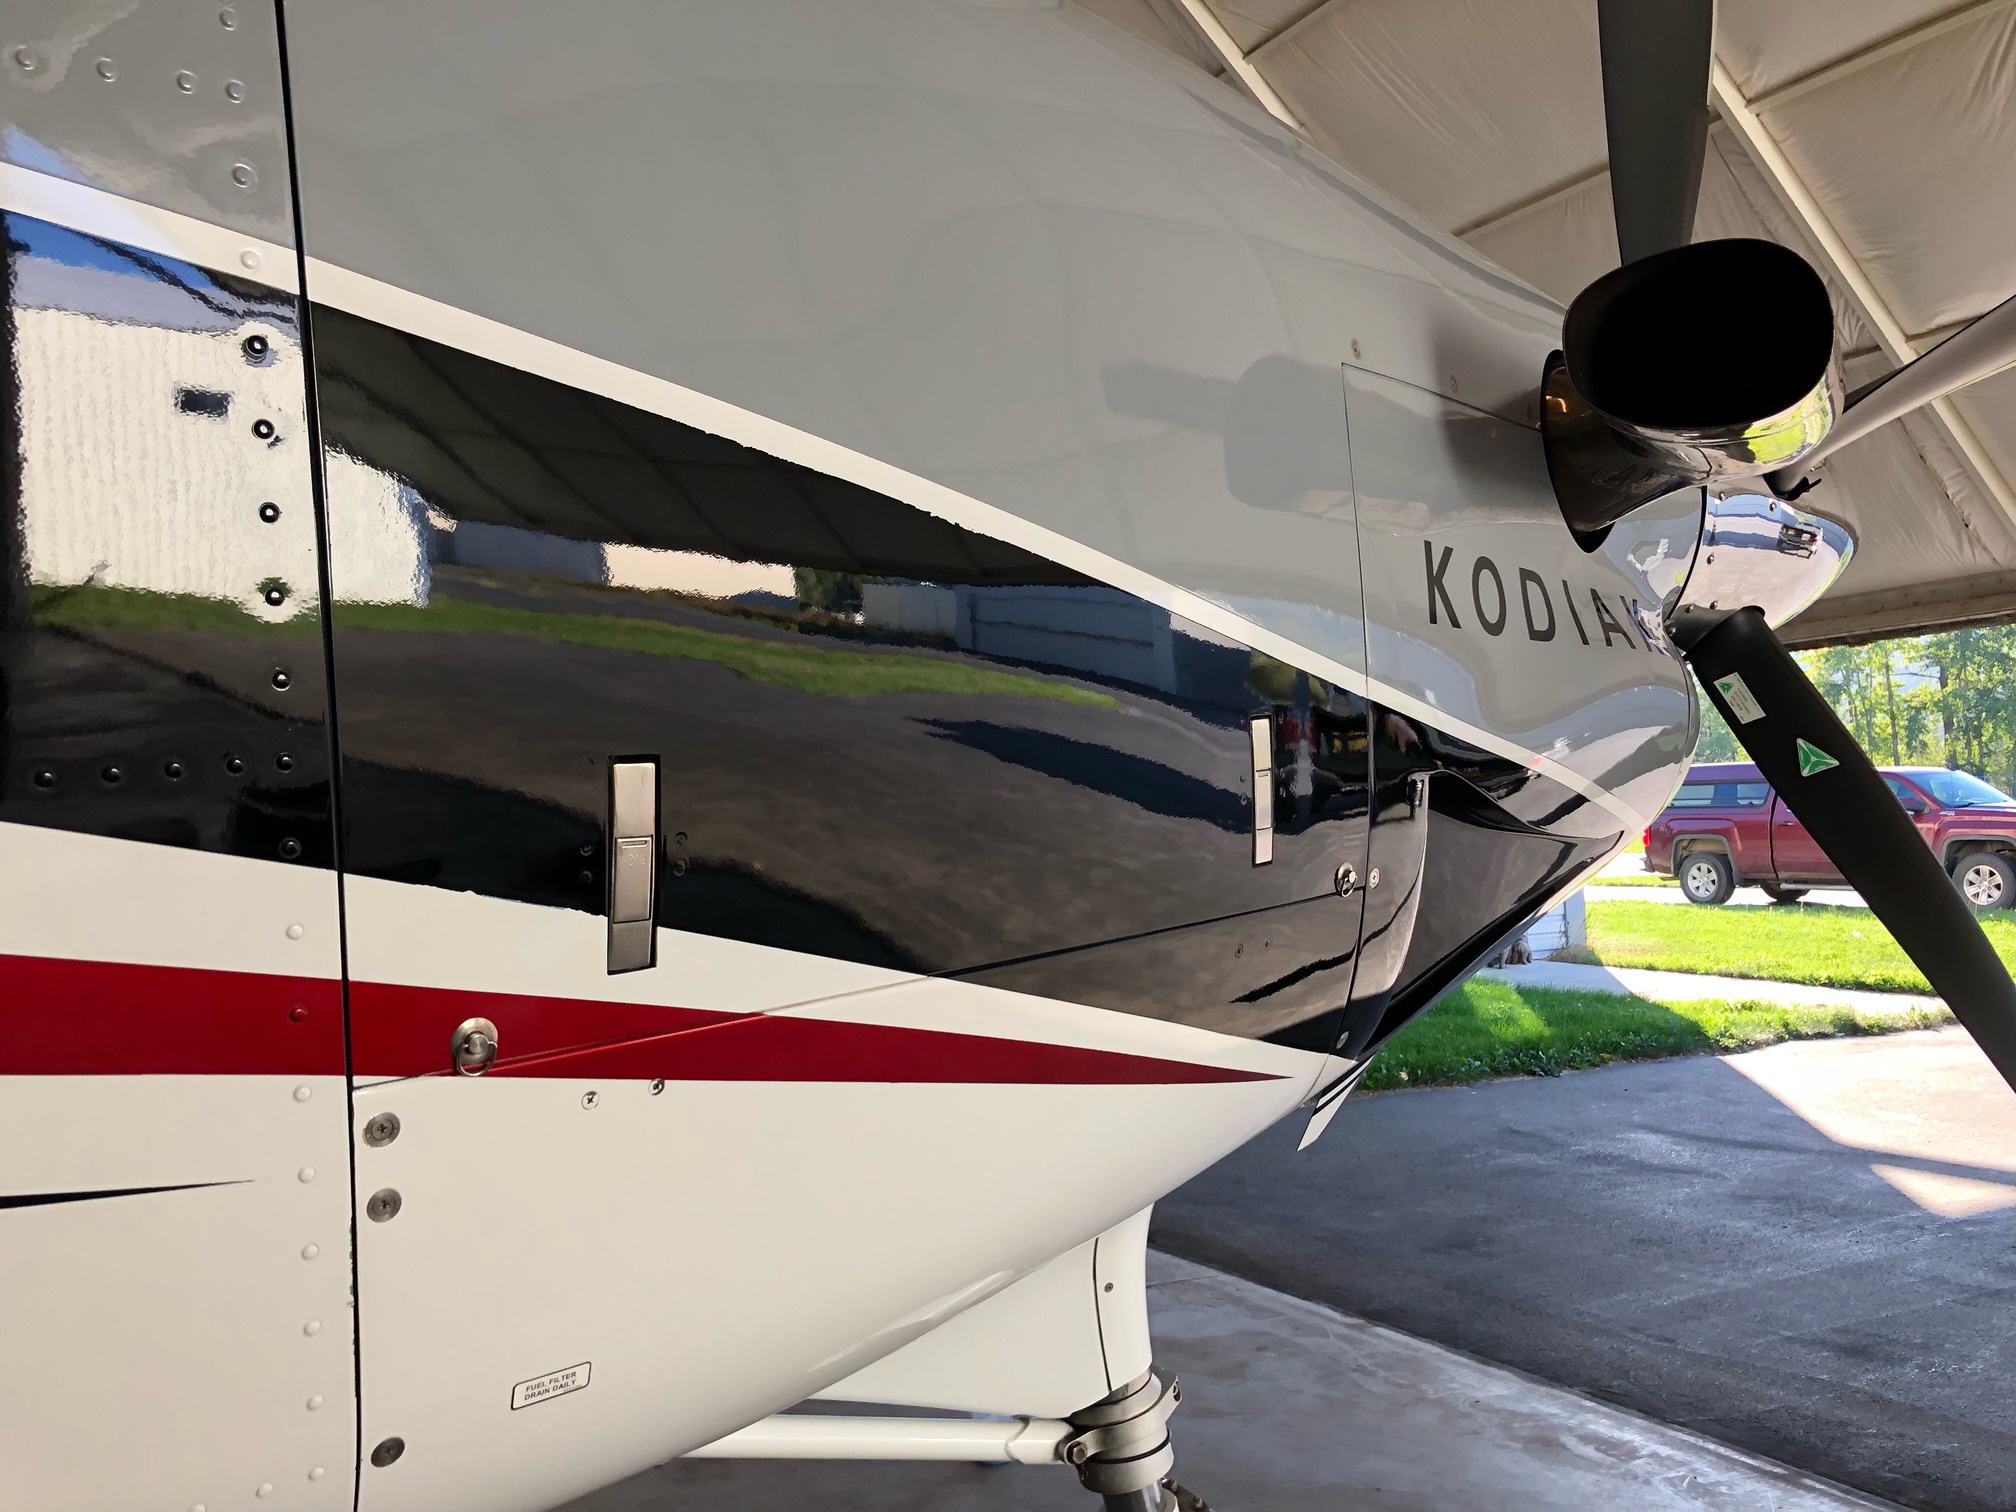 Kodiak plane receives aircraft paint protection